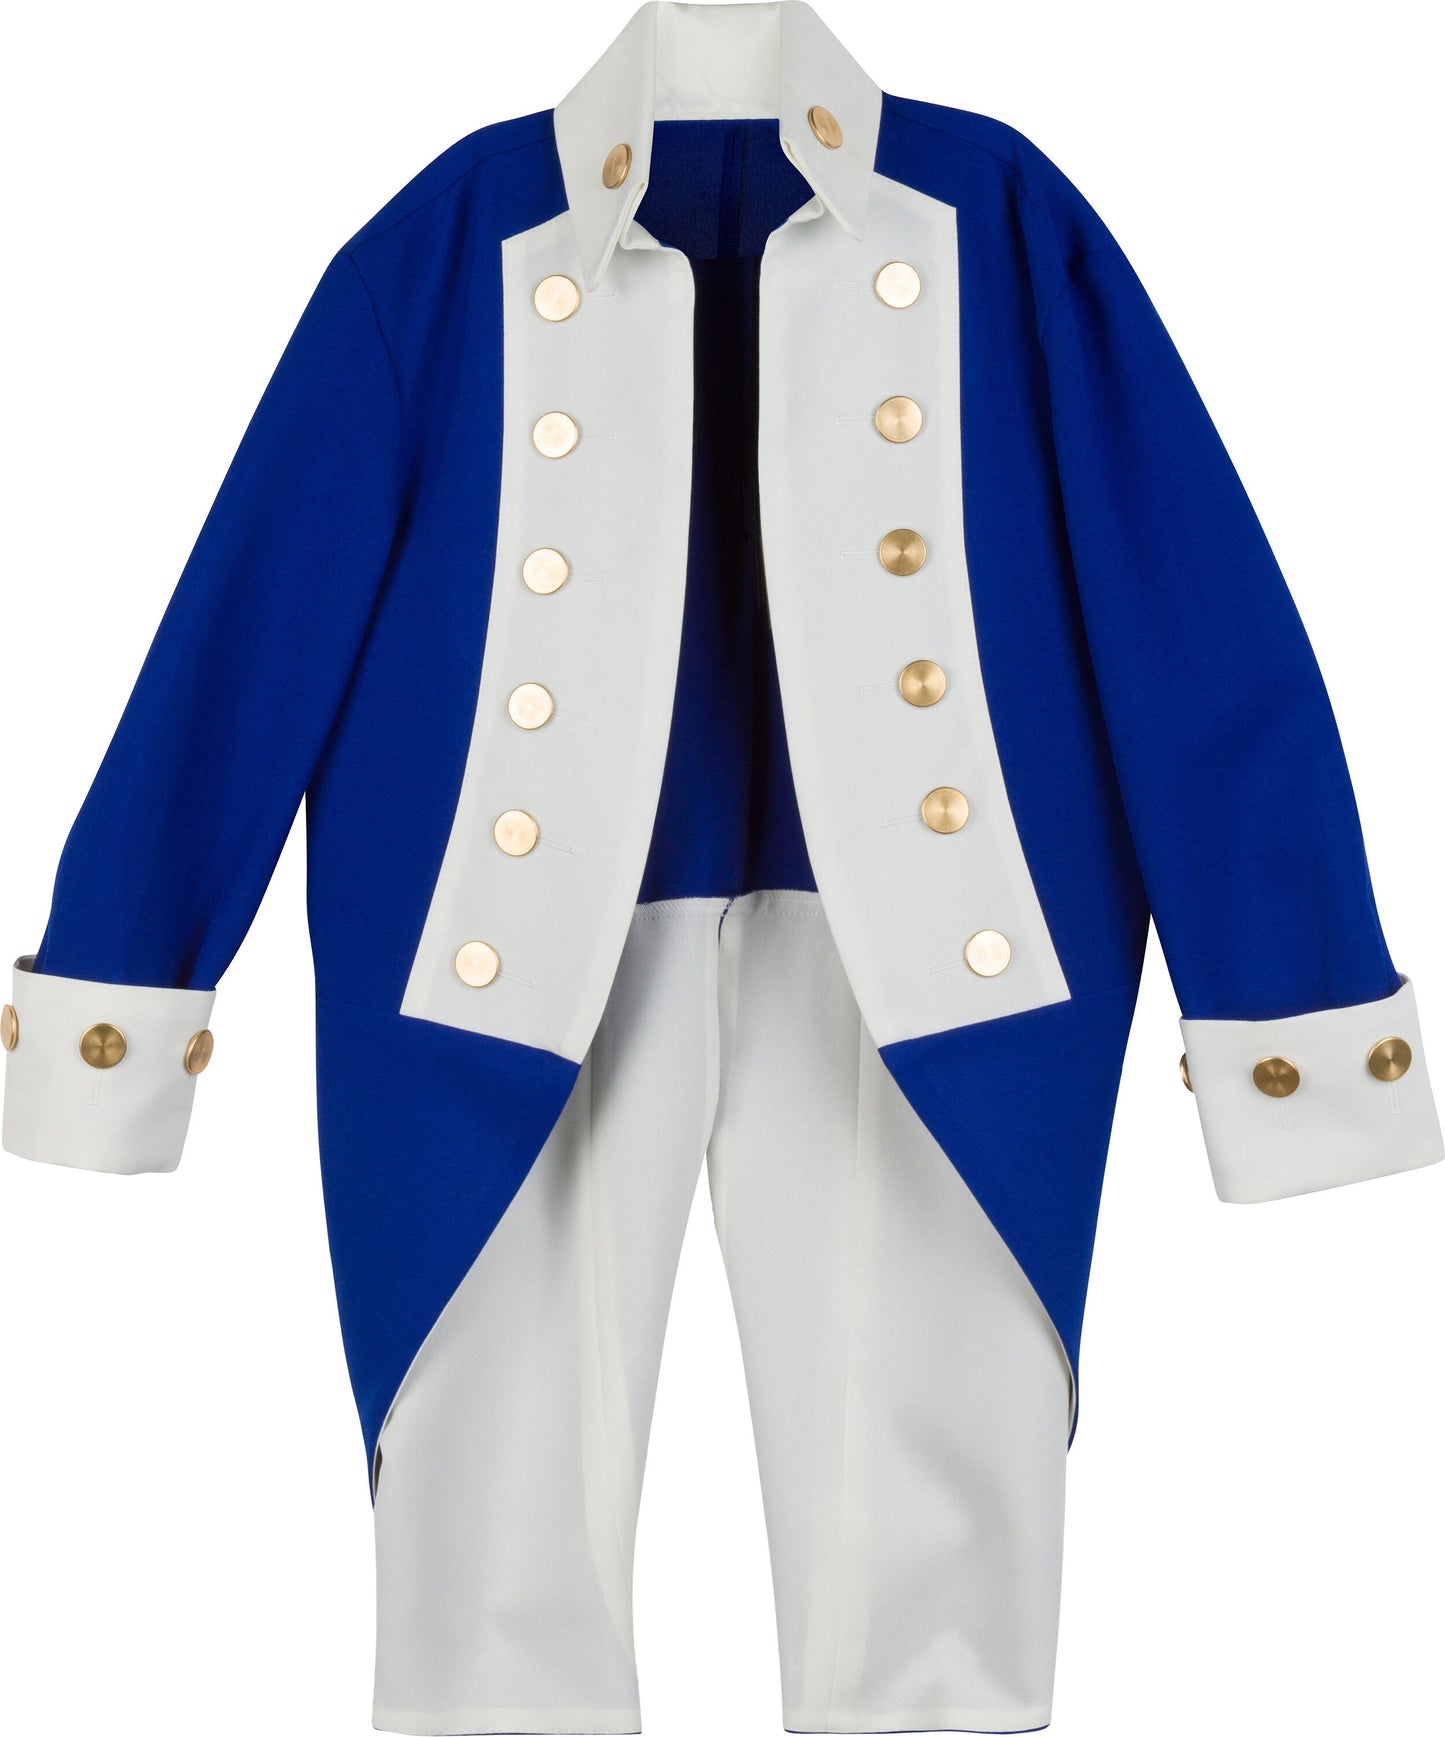 Deluxe Children's John Barry Revolutionary War Uniform